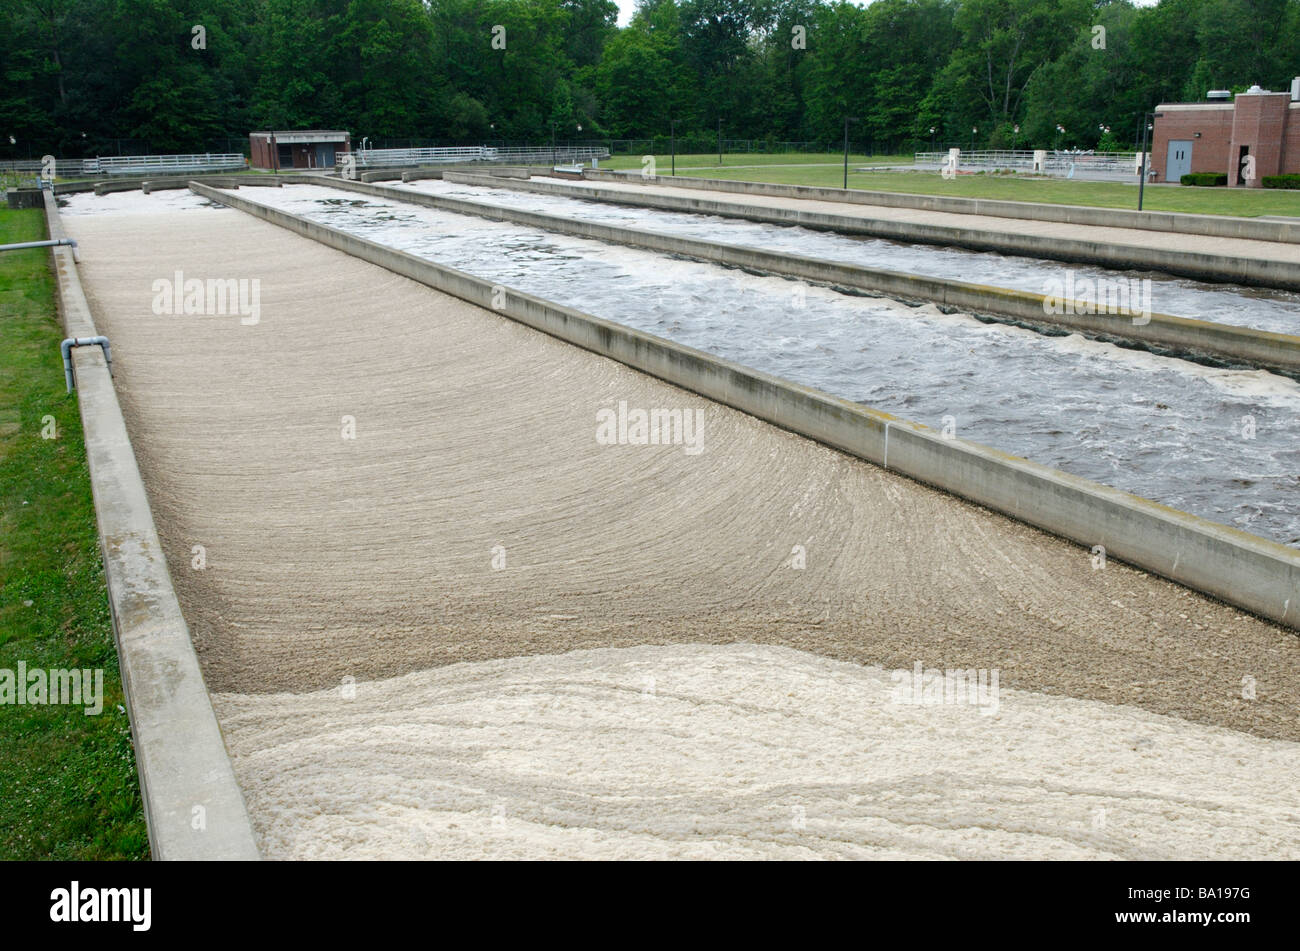 Activated sludge secondary sewage treatment system. Stock Photo